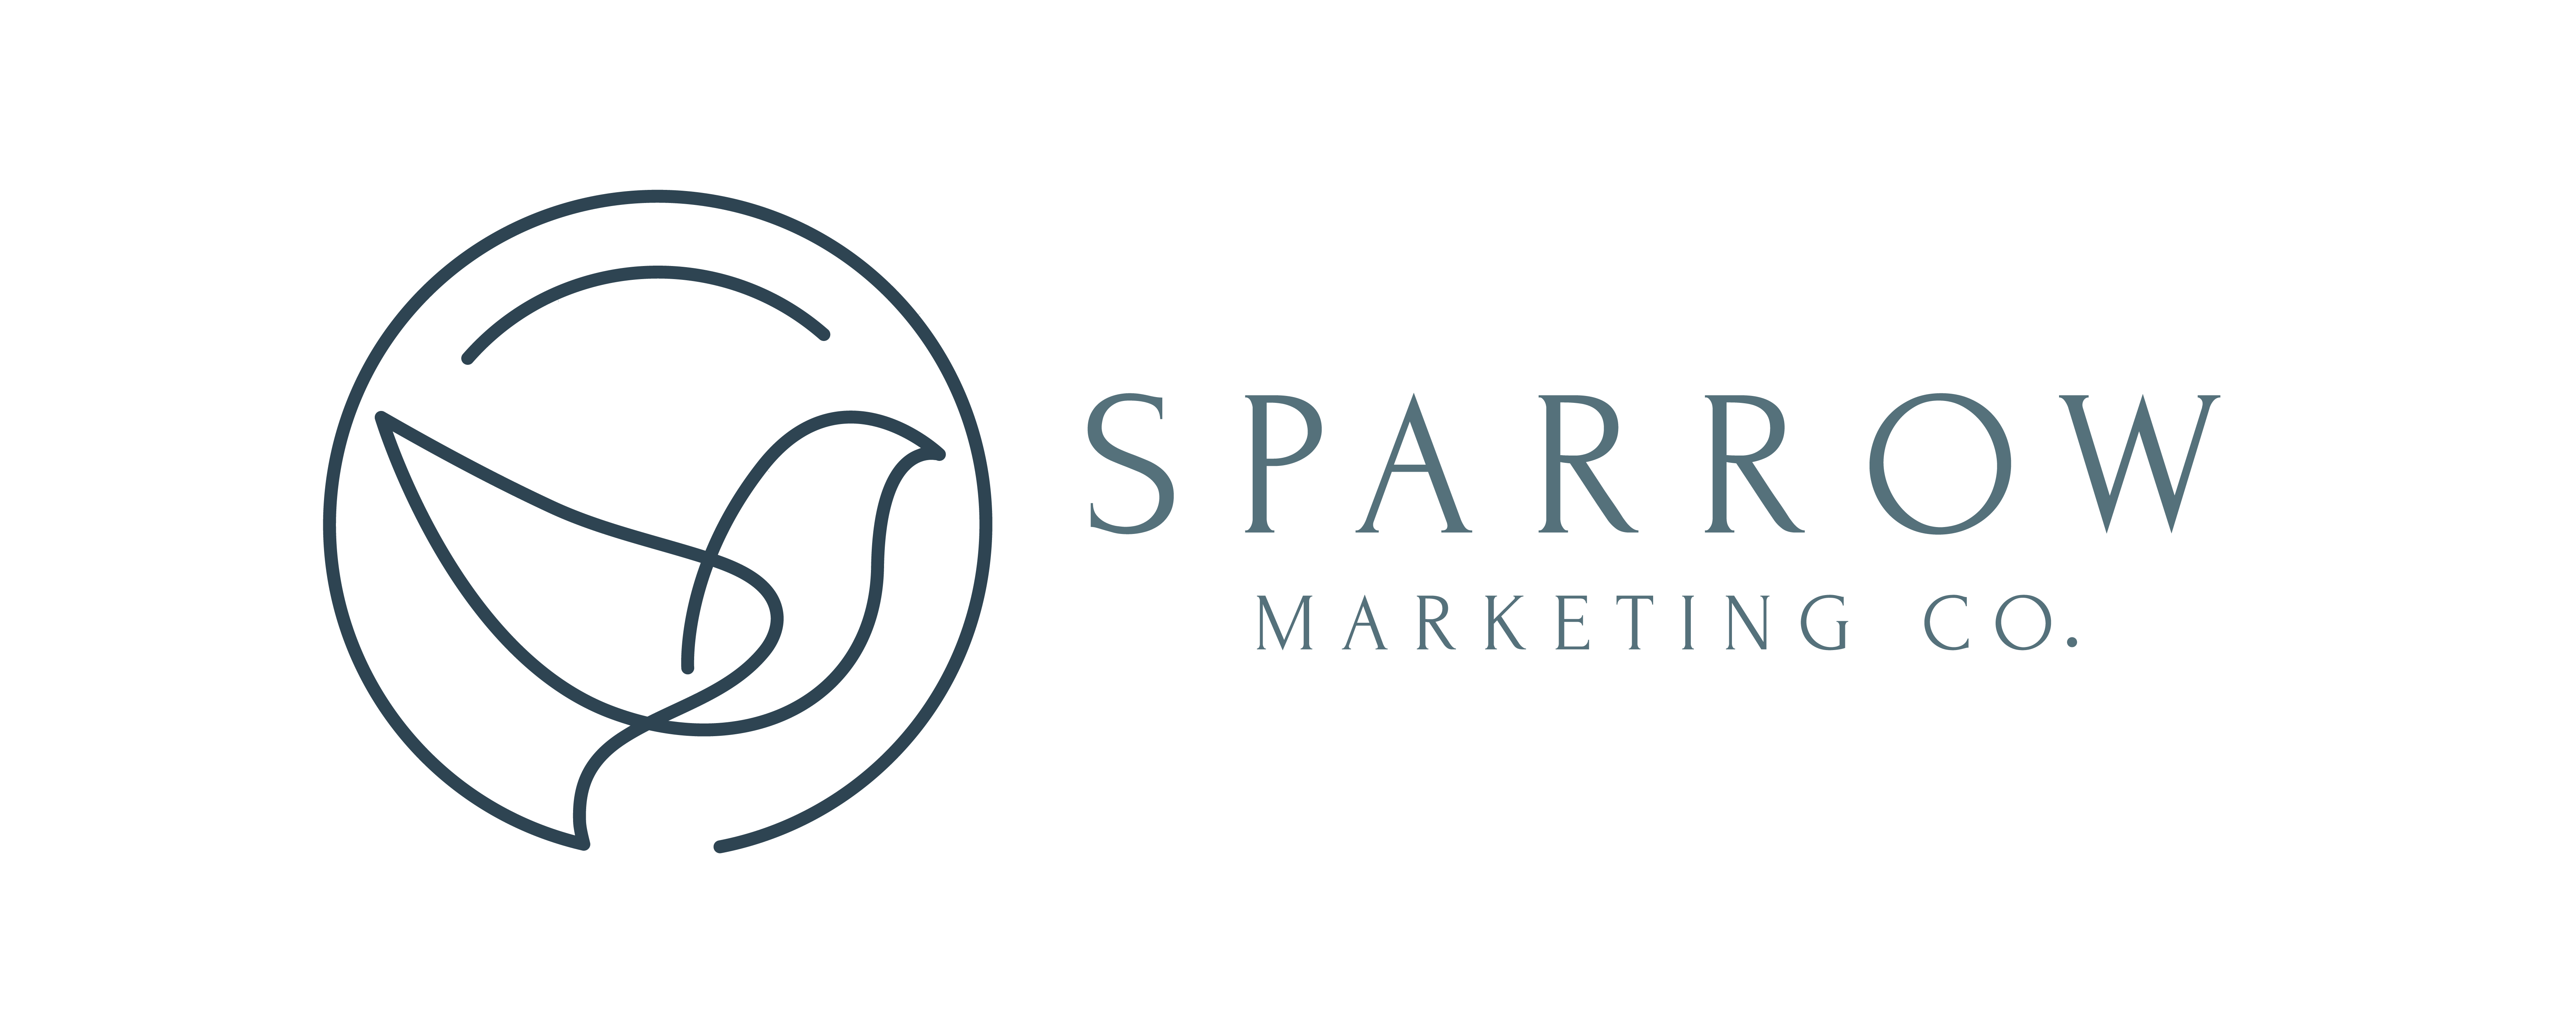 Sparrow Marketing Co.